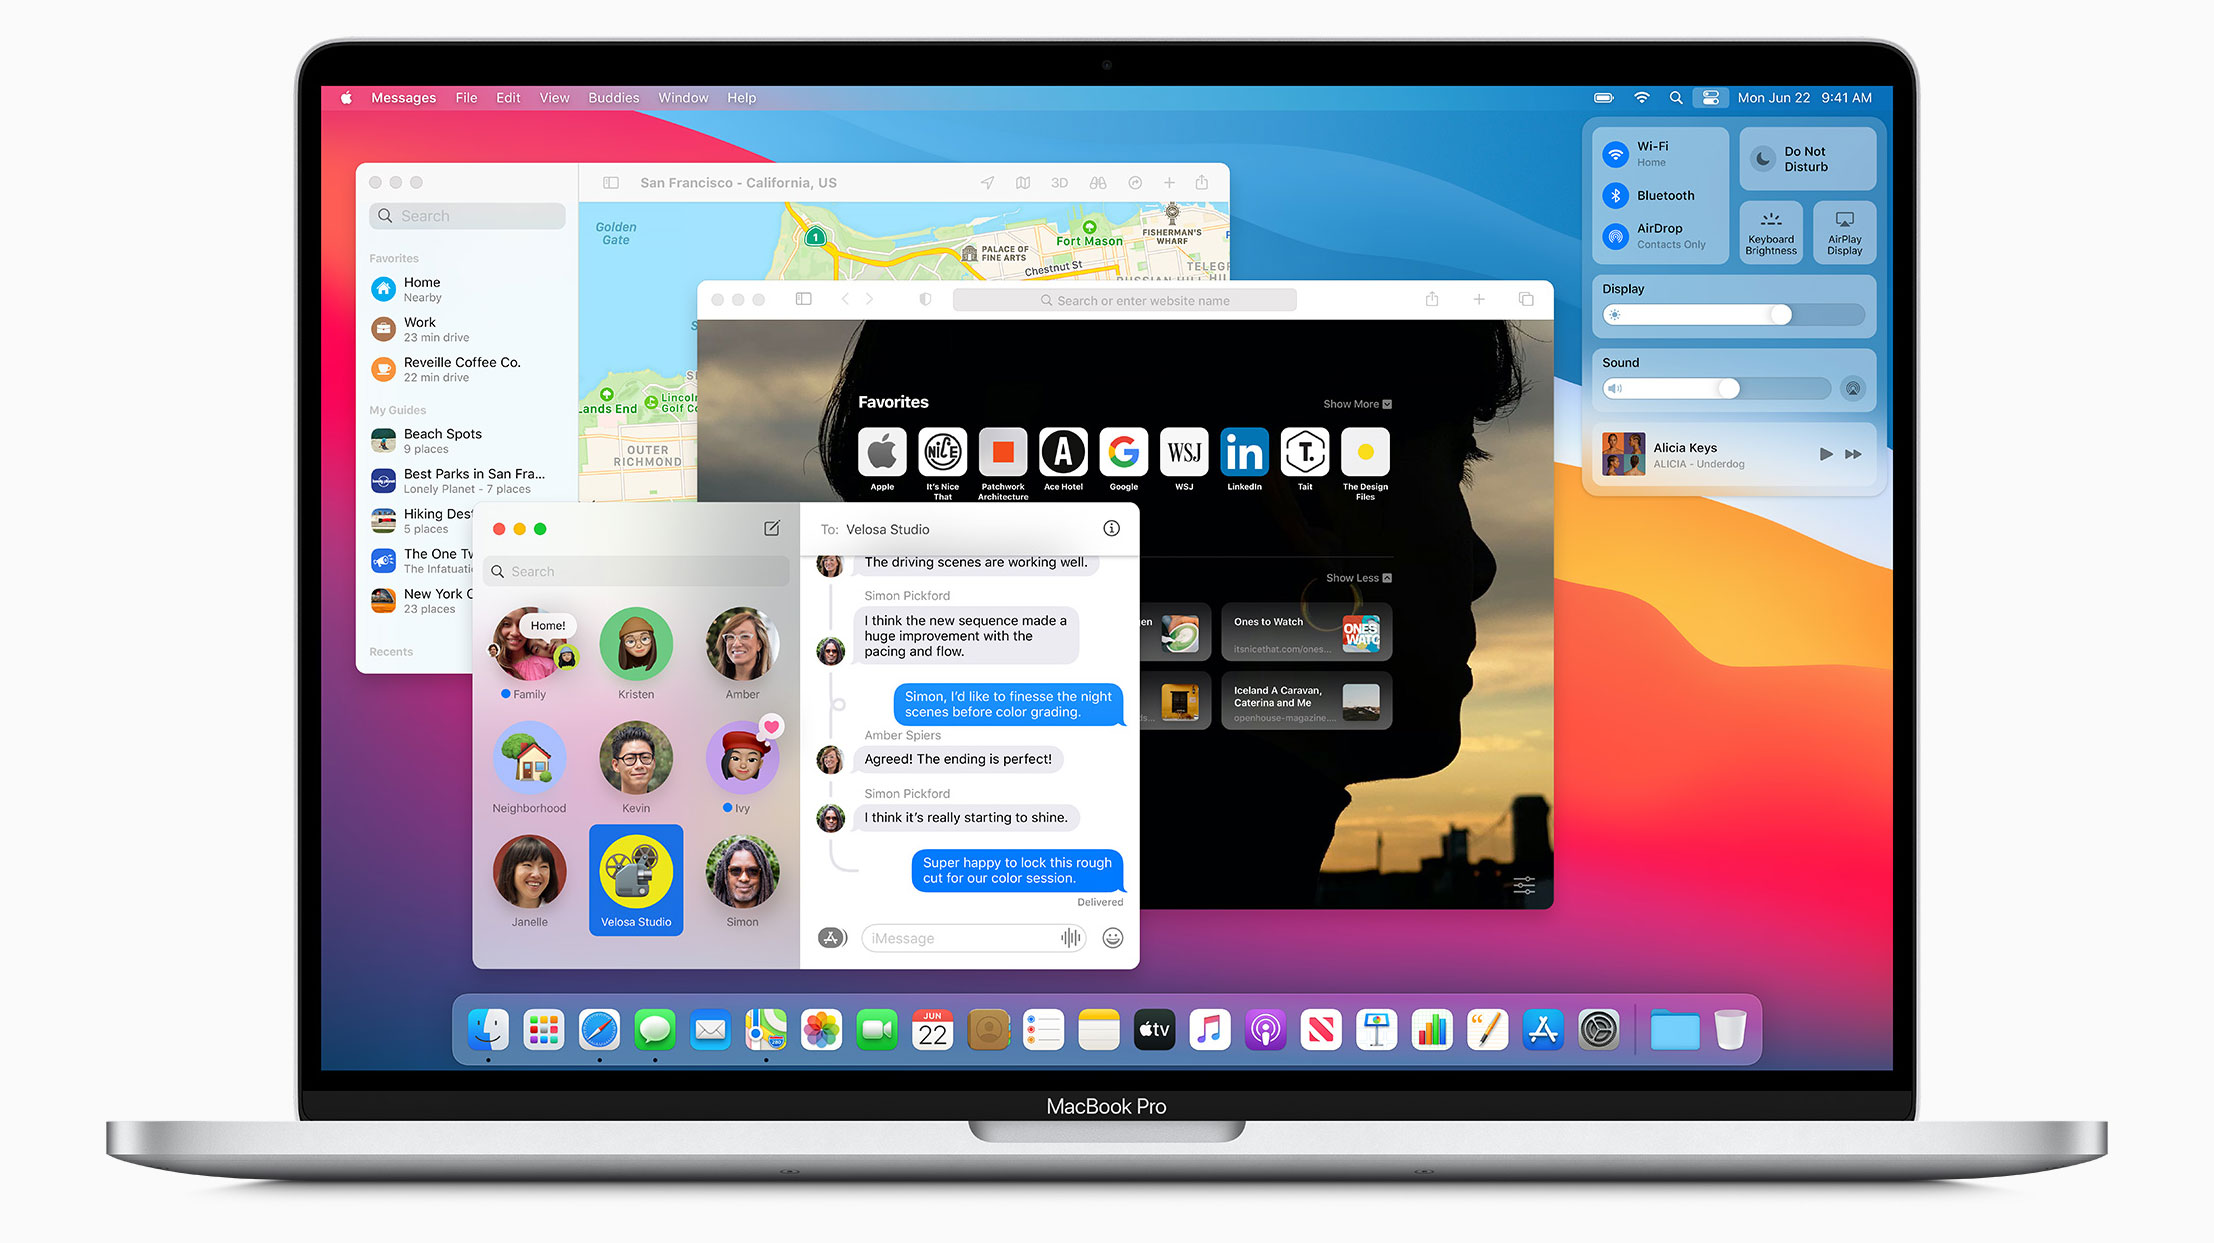 MacBook Pro running macOS Big Sur